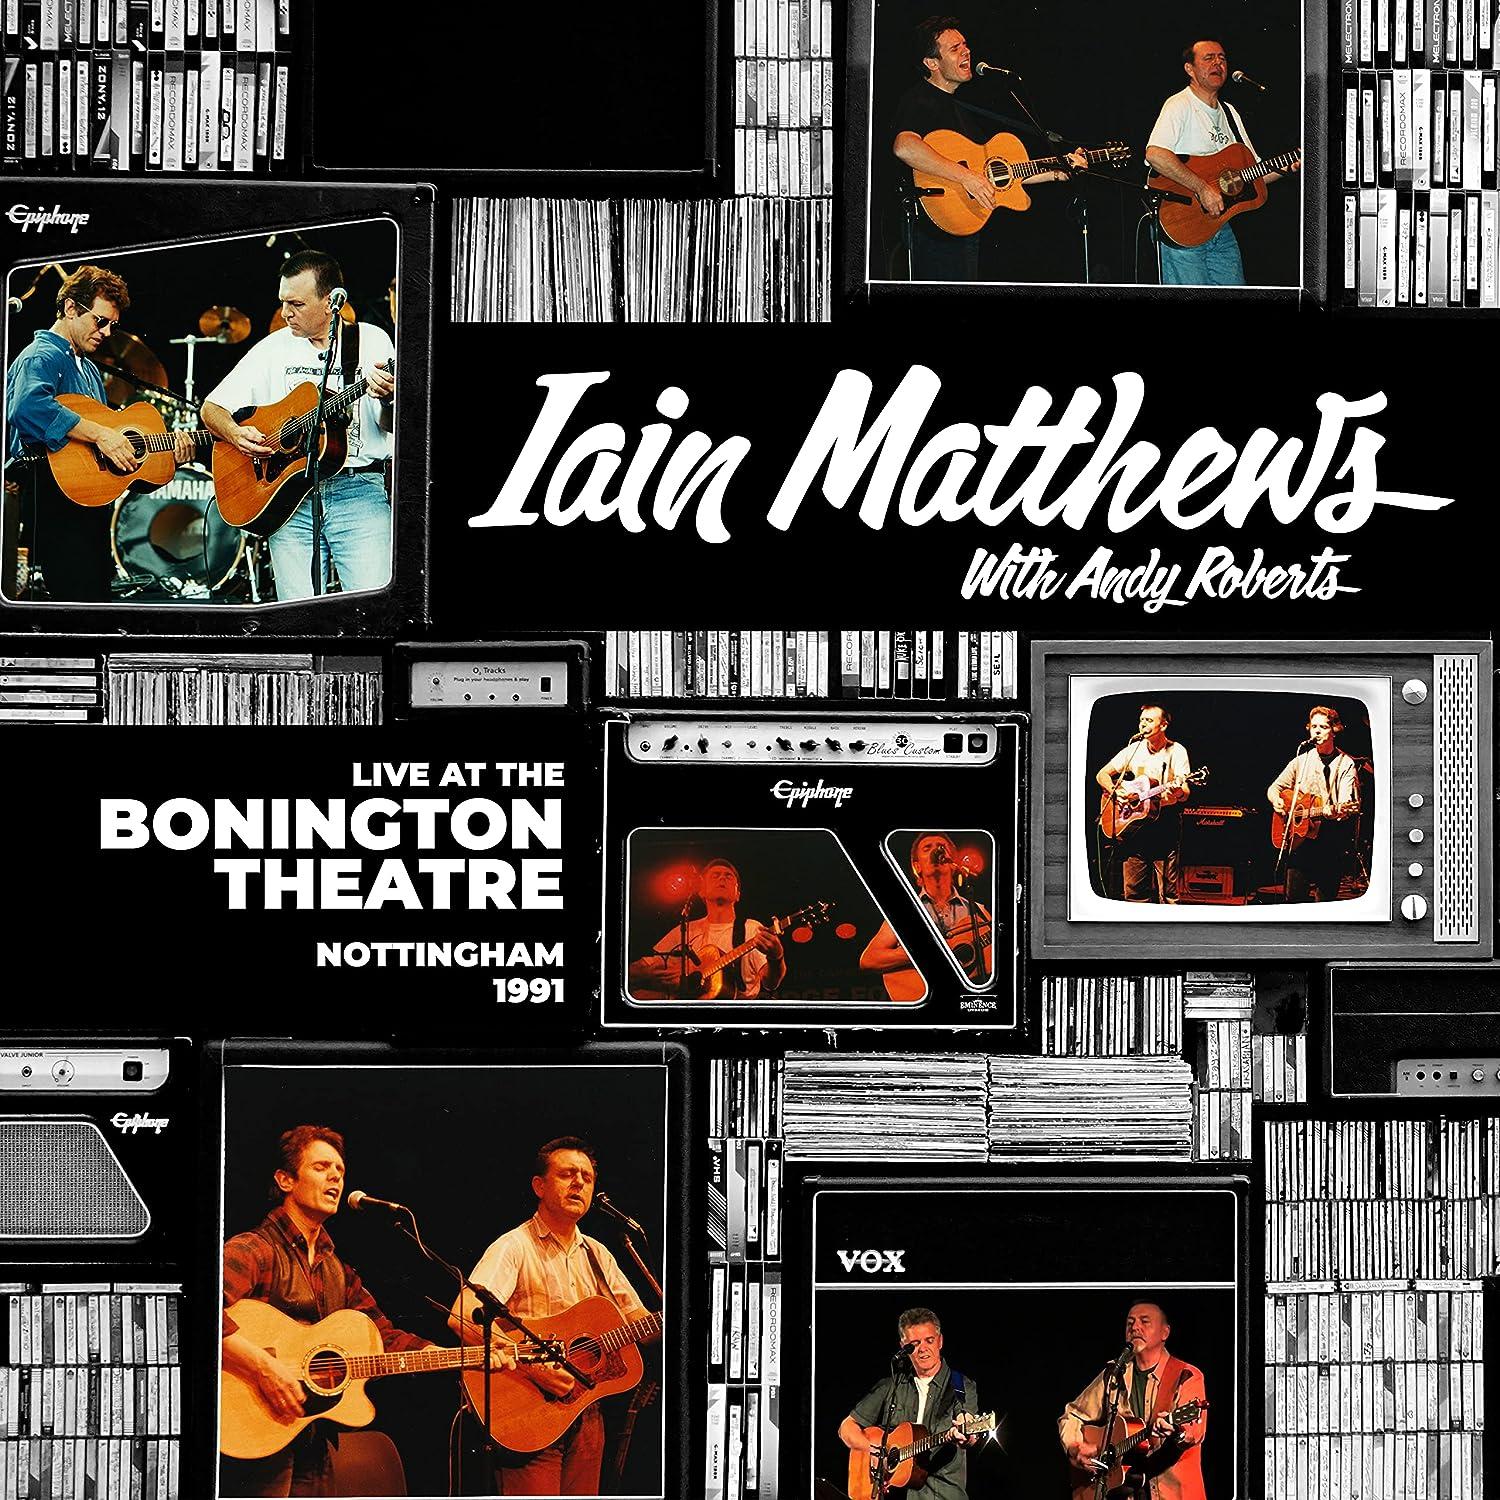 Matthews, Iain With Andy Roberts - Live At The Bonington Theatre Nottingham 1991